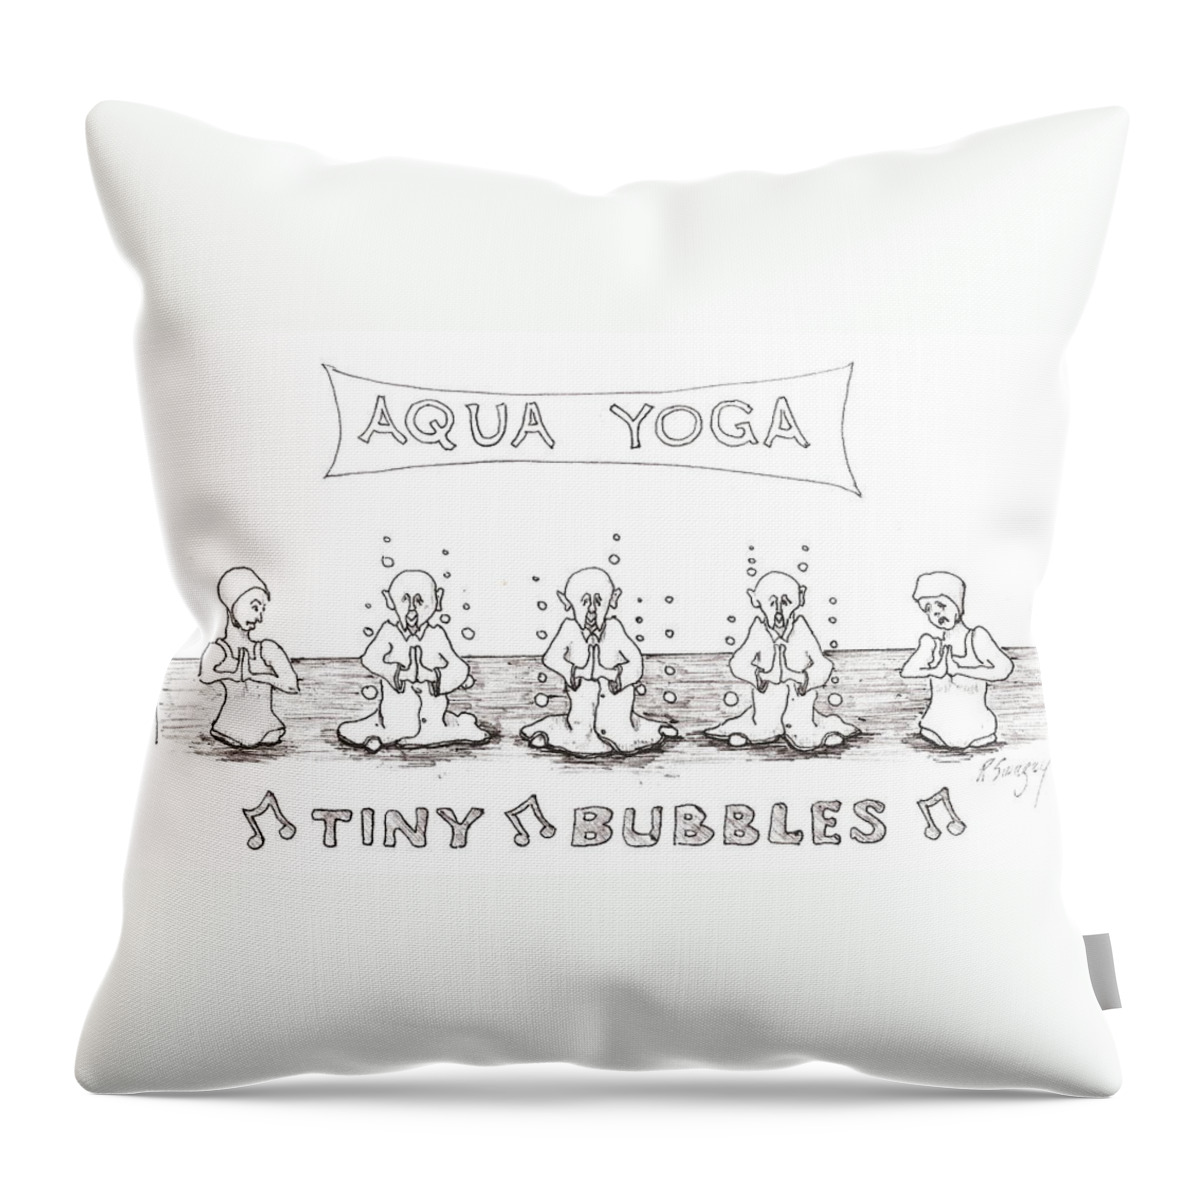 Aqua Throw Pillow featuring the drawing Aqua Yoga by R Allen Swezey